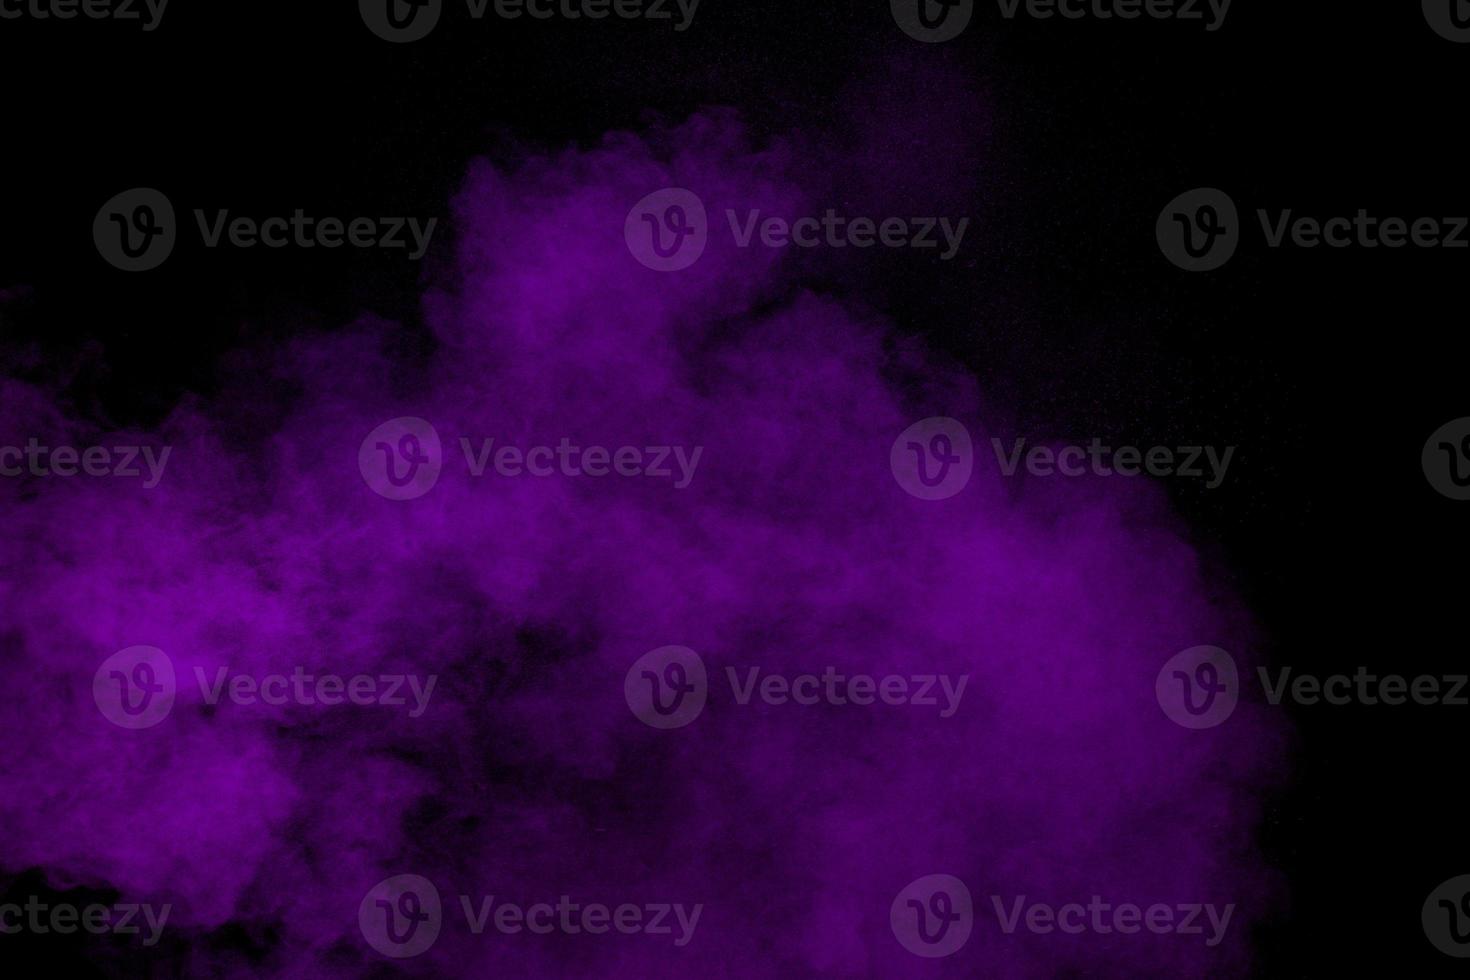 Abstract purple powder explosion on black background, Freeze motion of purple dust splashing. photo